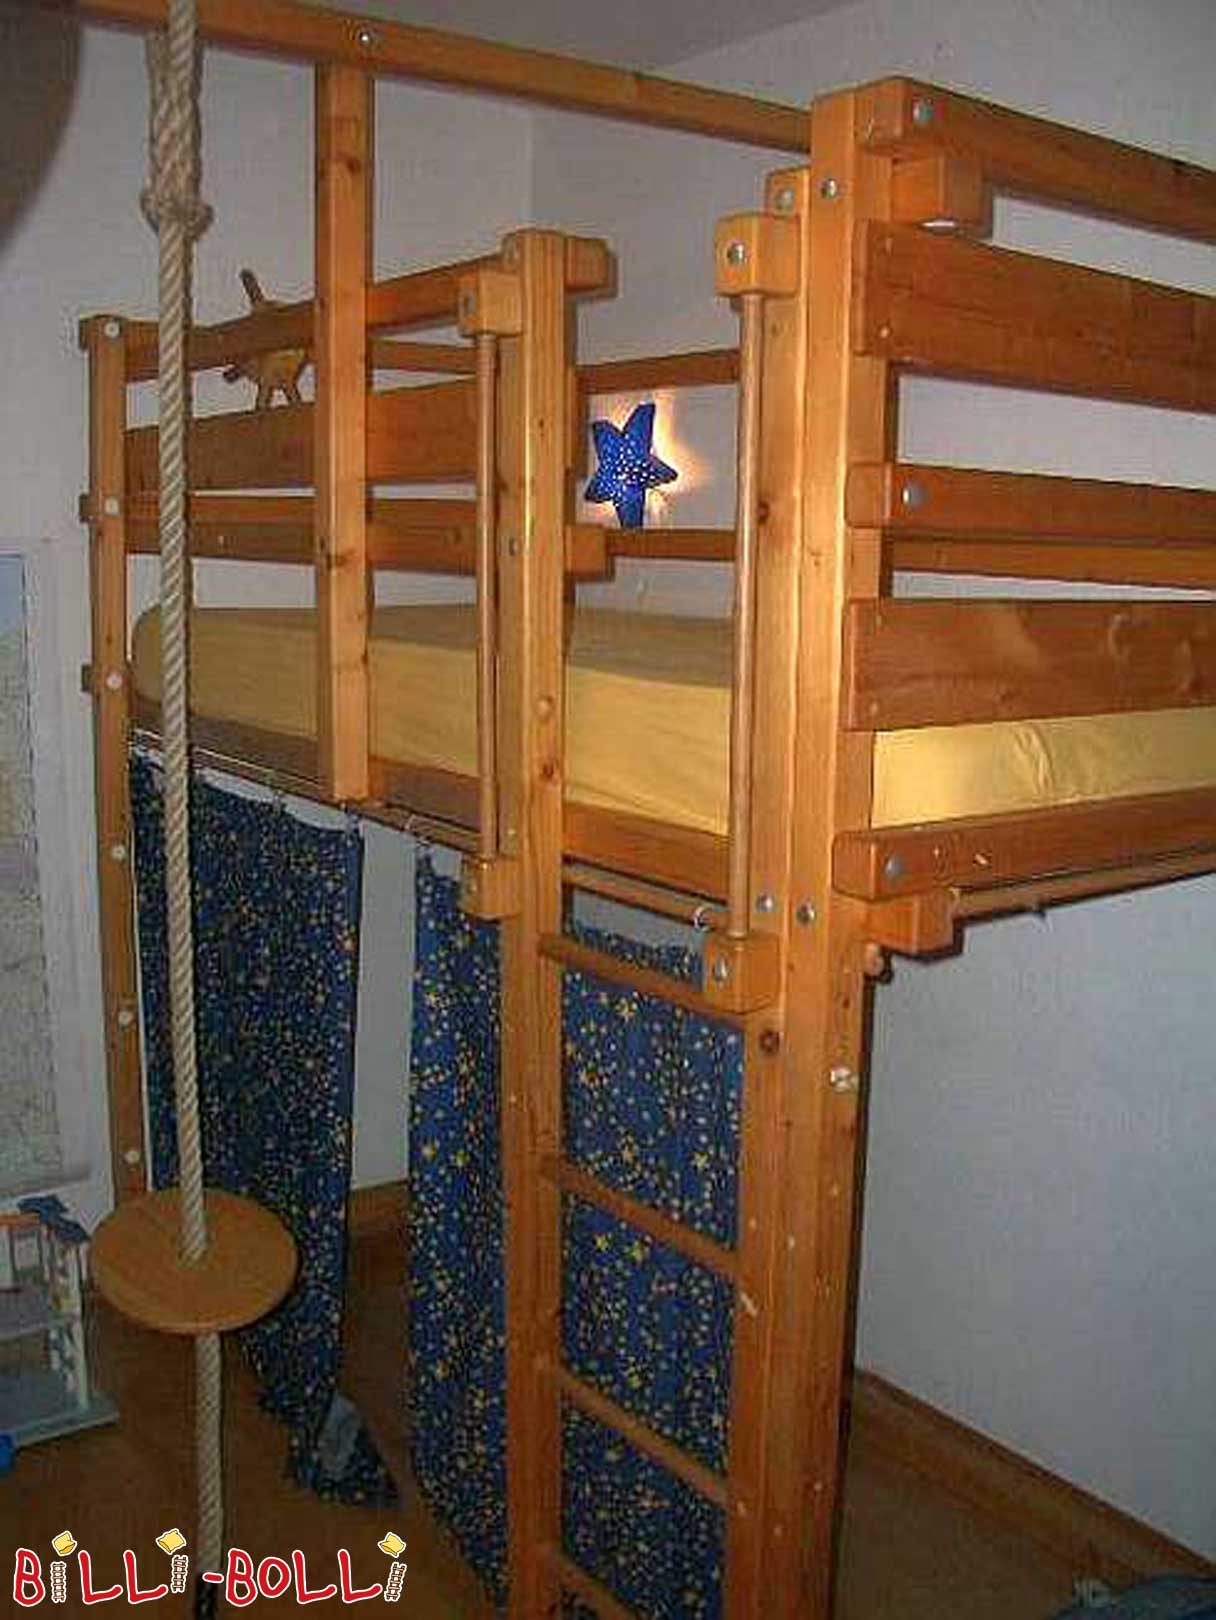 Billi-Bolli bunk bed (Category: second hand loft bed)